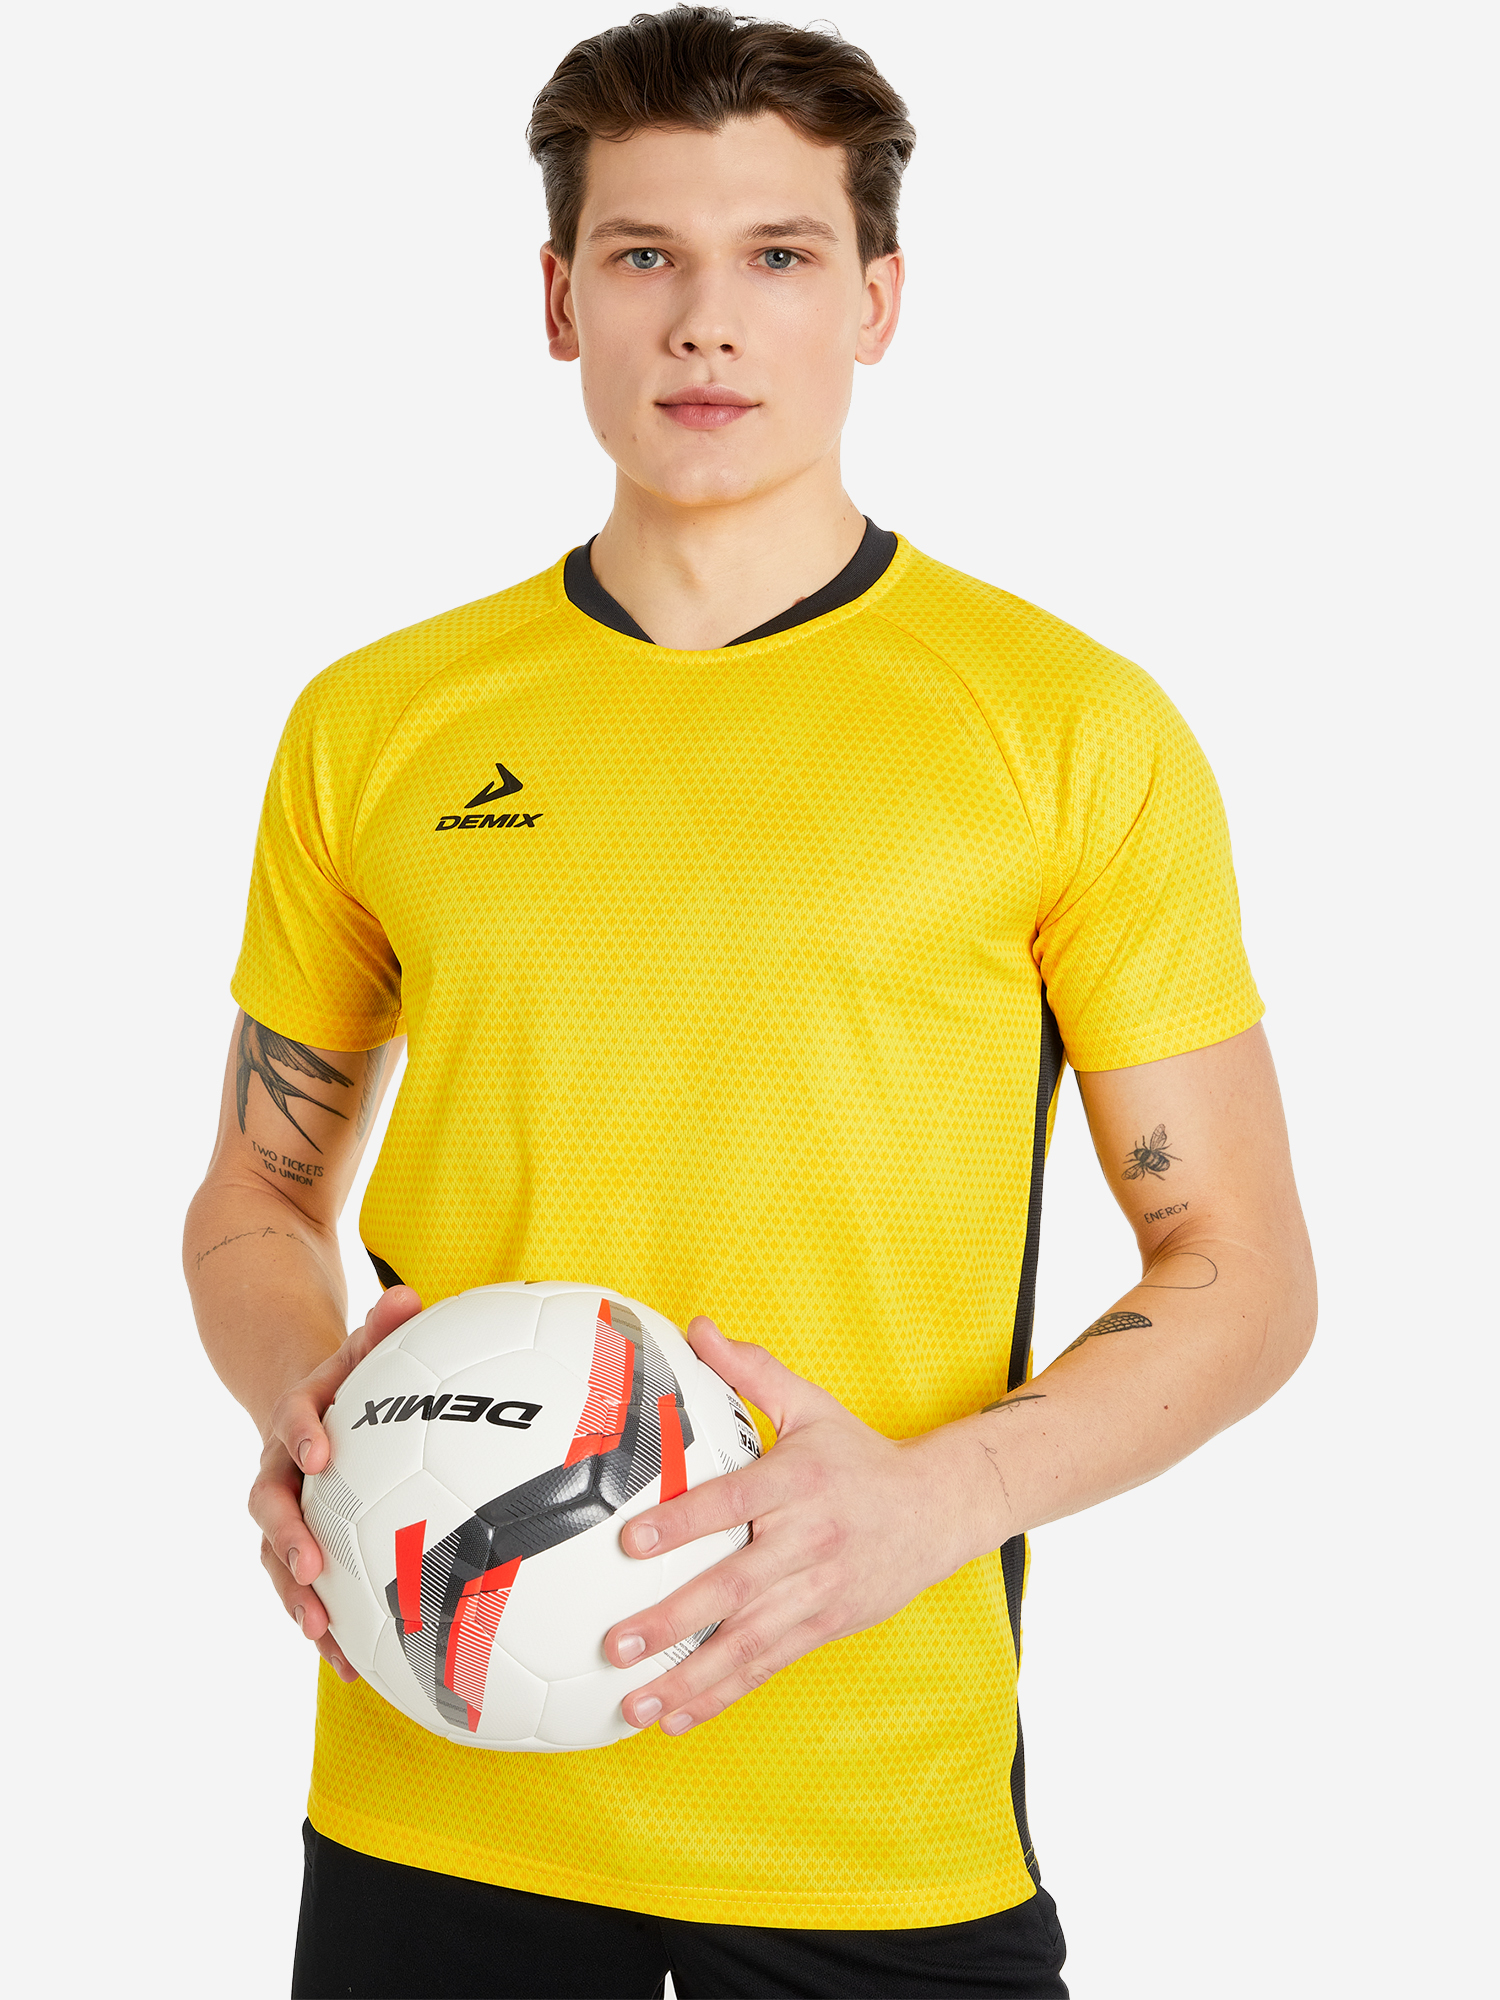 Футболка мужская Demix Strike, Желтый футболка мужская demix pace желтый